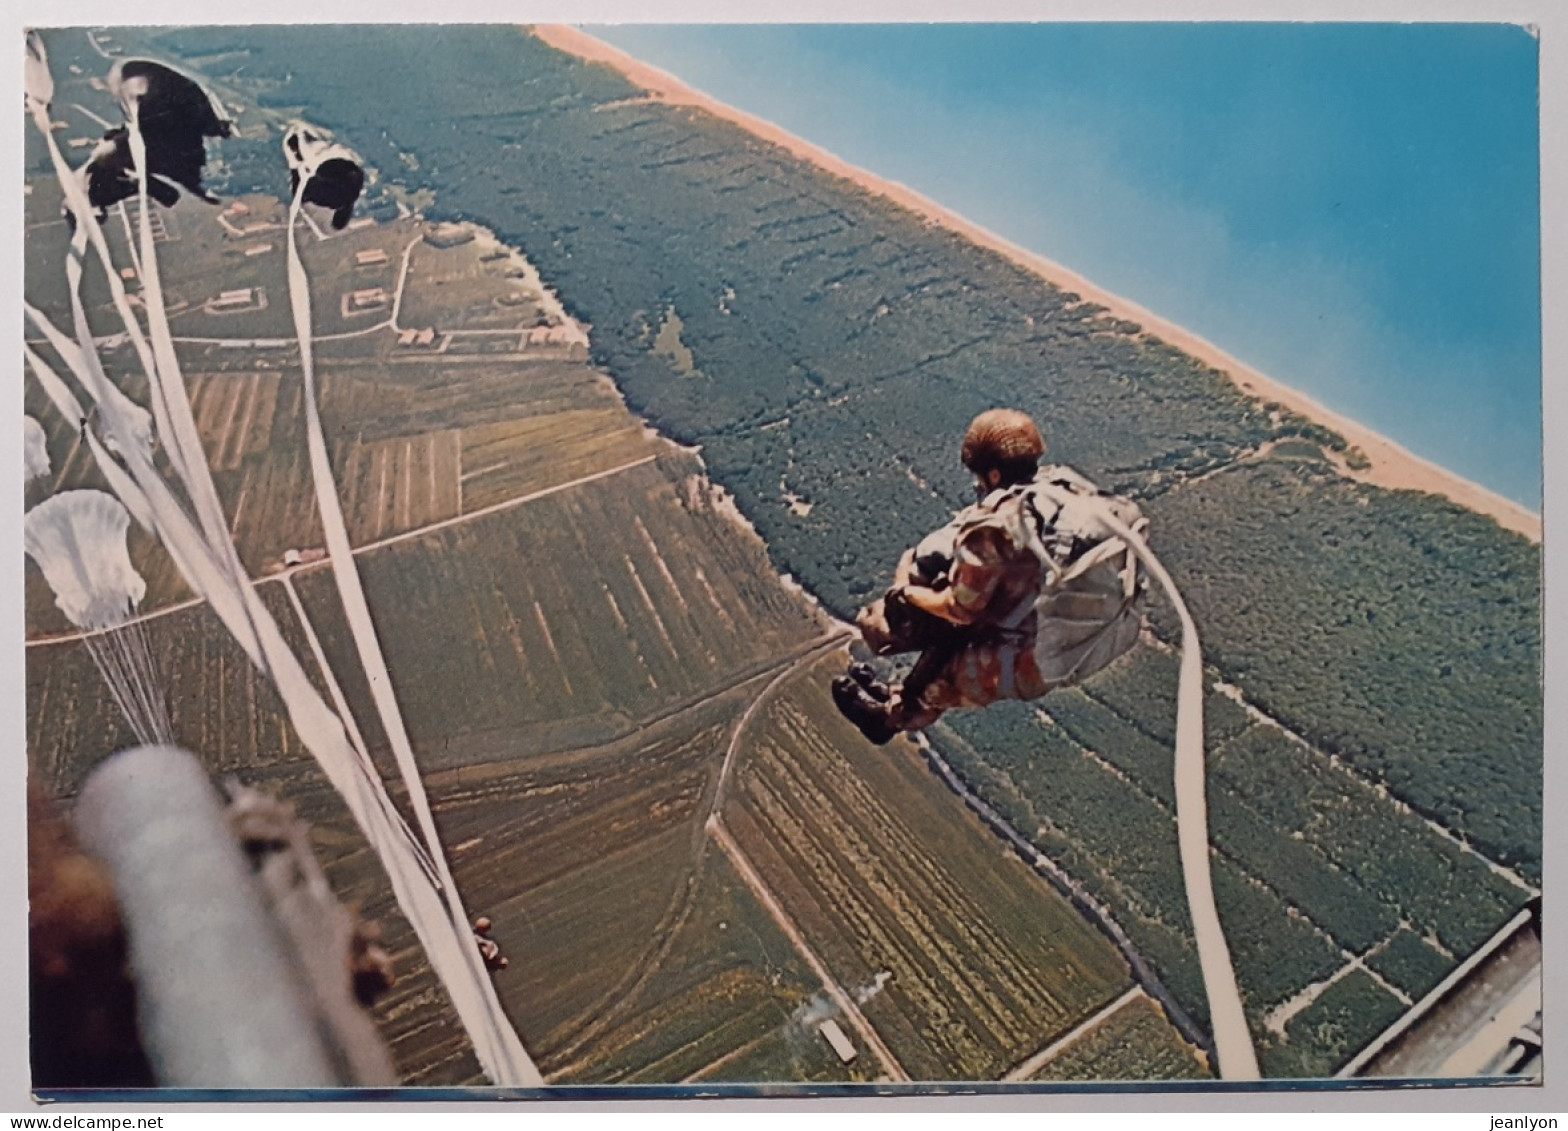 CARABINIER PARACHUTISTE ITALIEN / MILITAIRE - Saut En Parachute - Carabinieri Paracadutisti / Carte Italienne - Parachutespringen